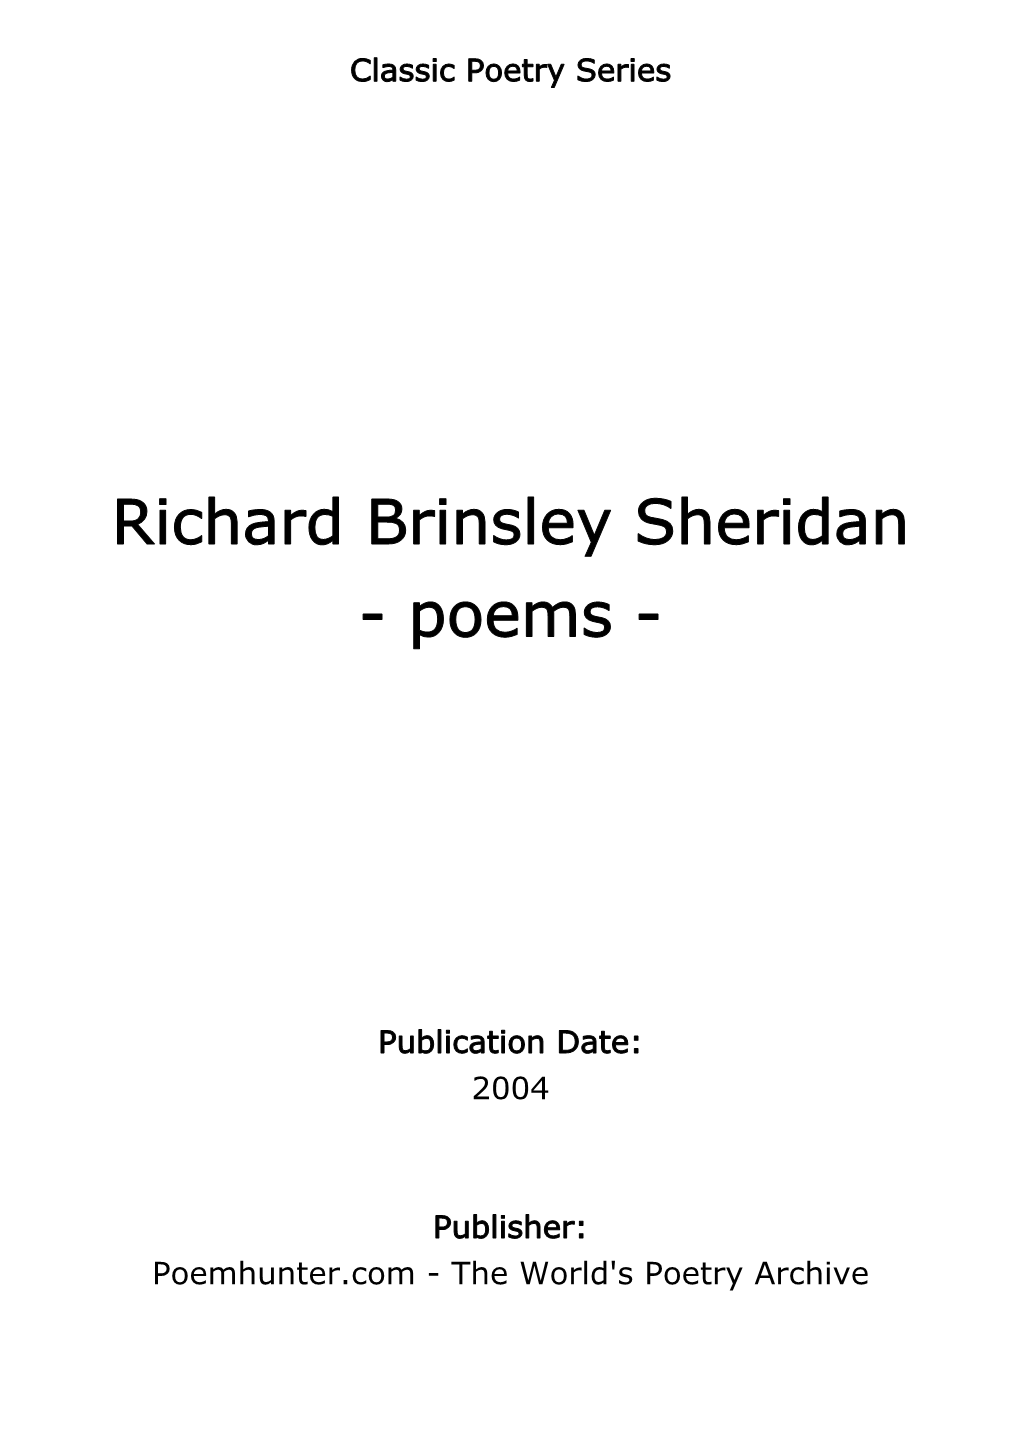 Richard Brinsley Sheridan - Poems